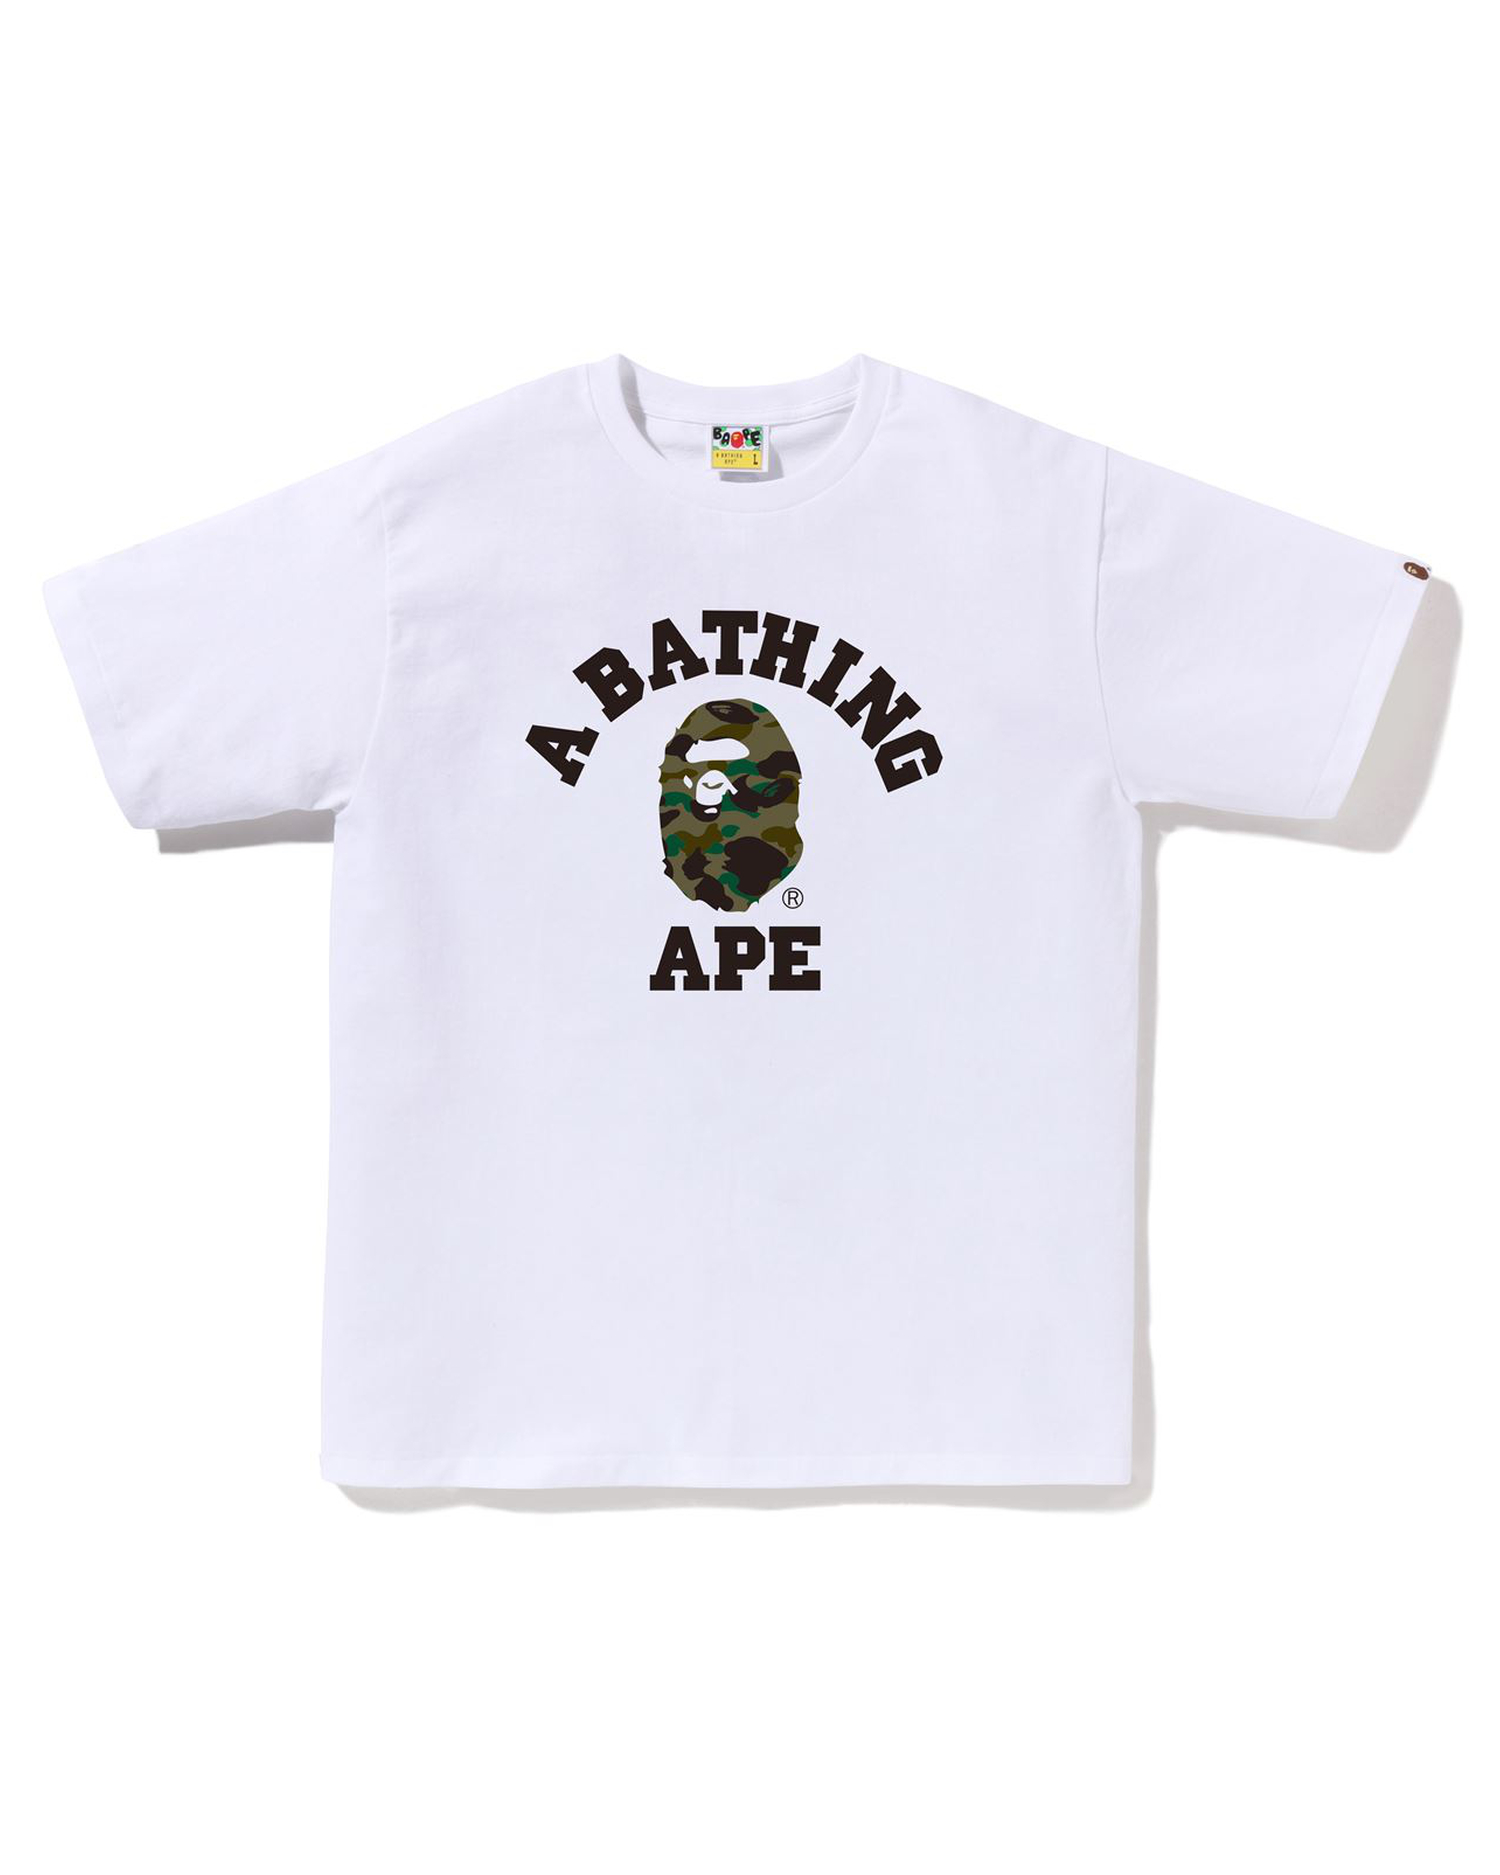 T-Shirts | BAPE